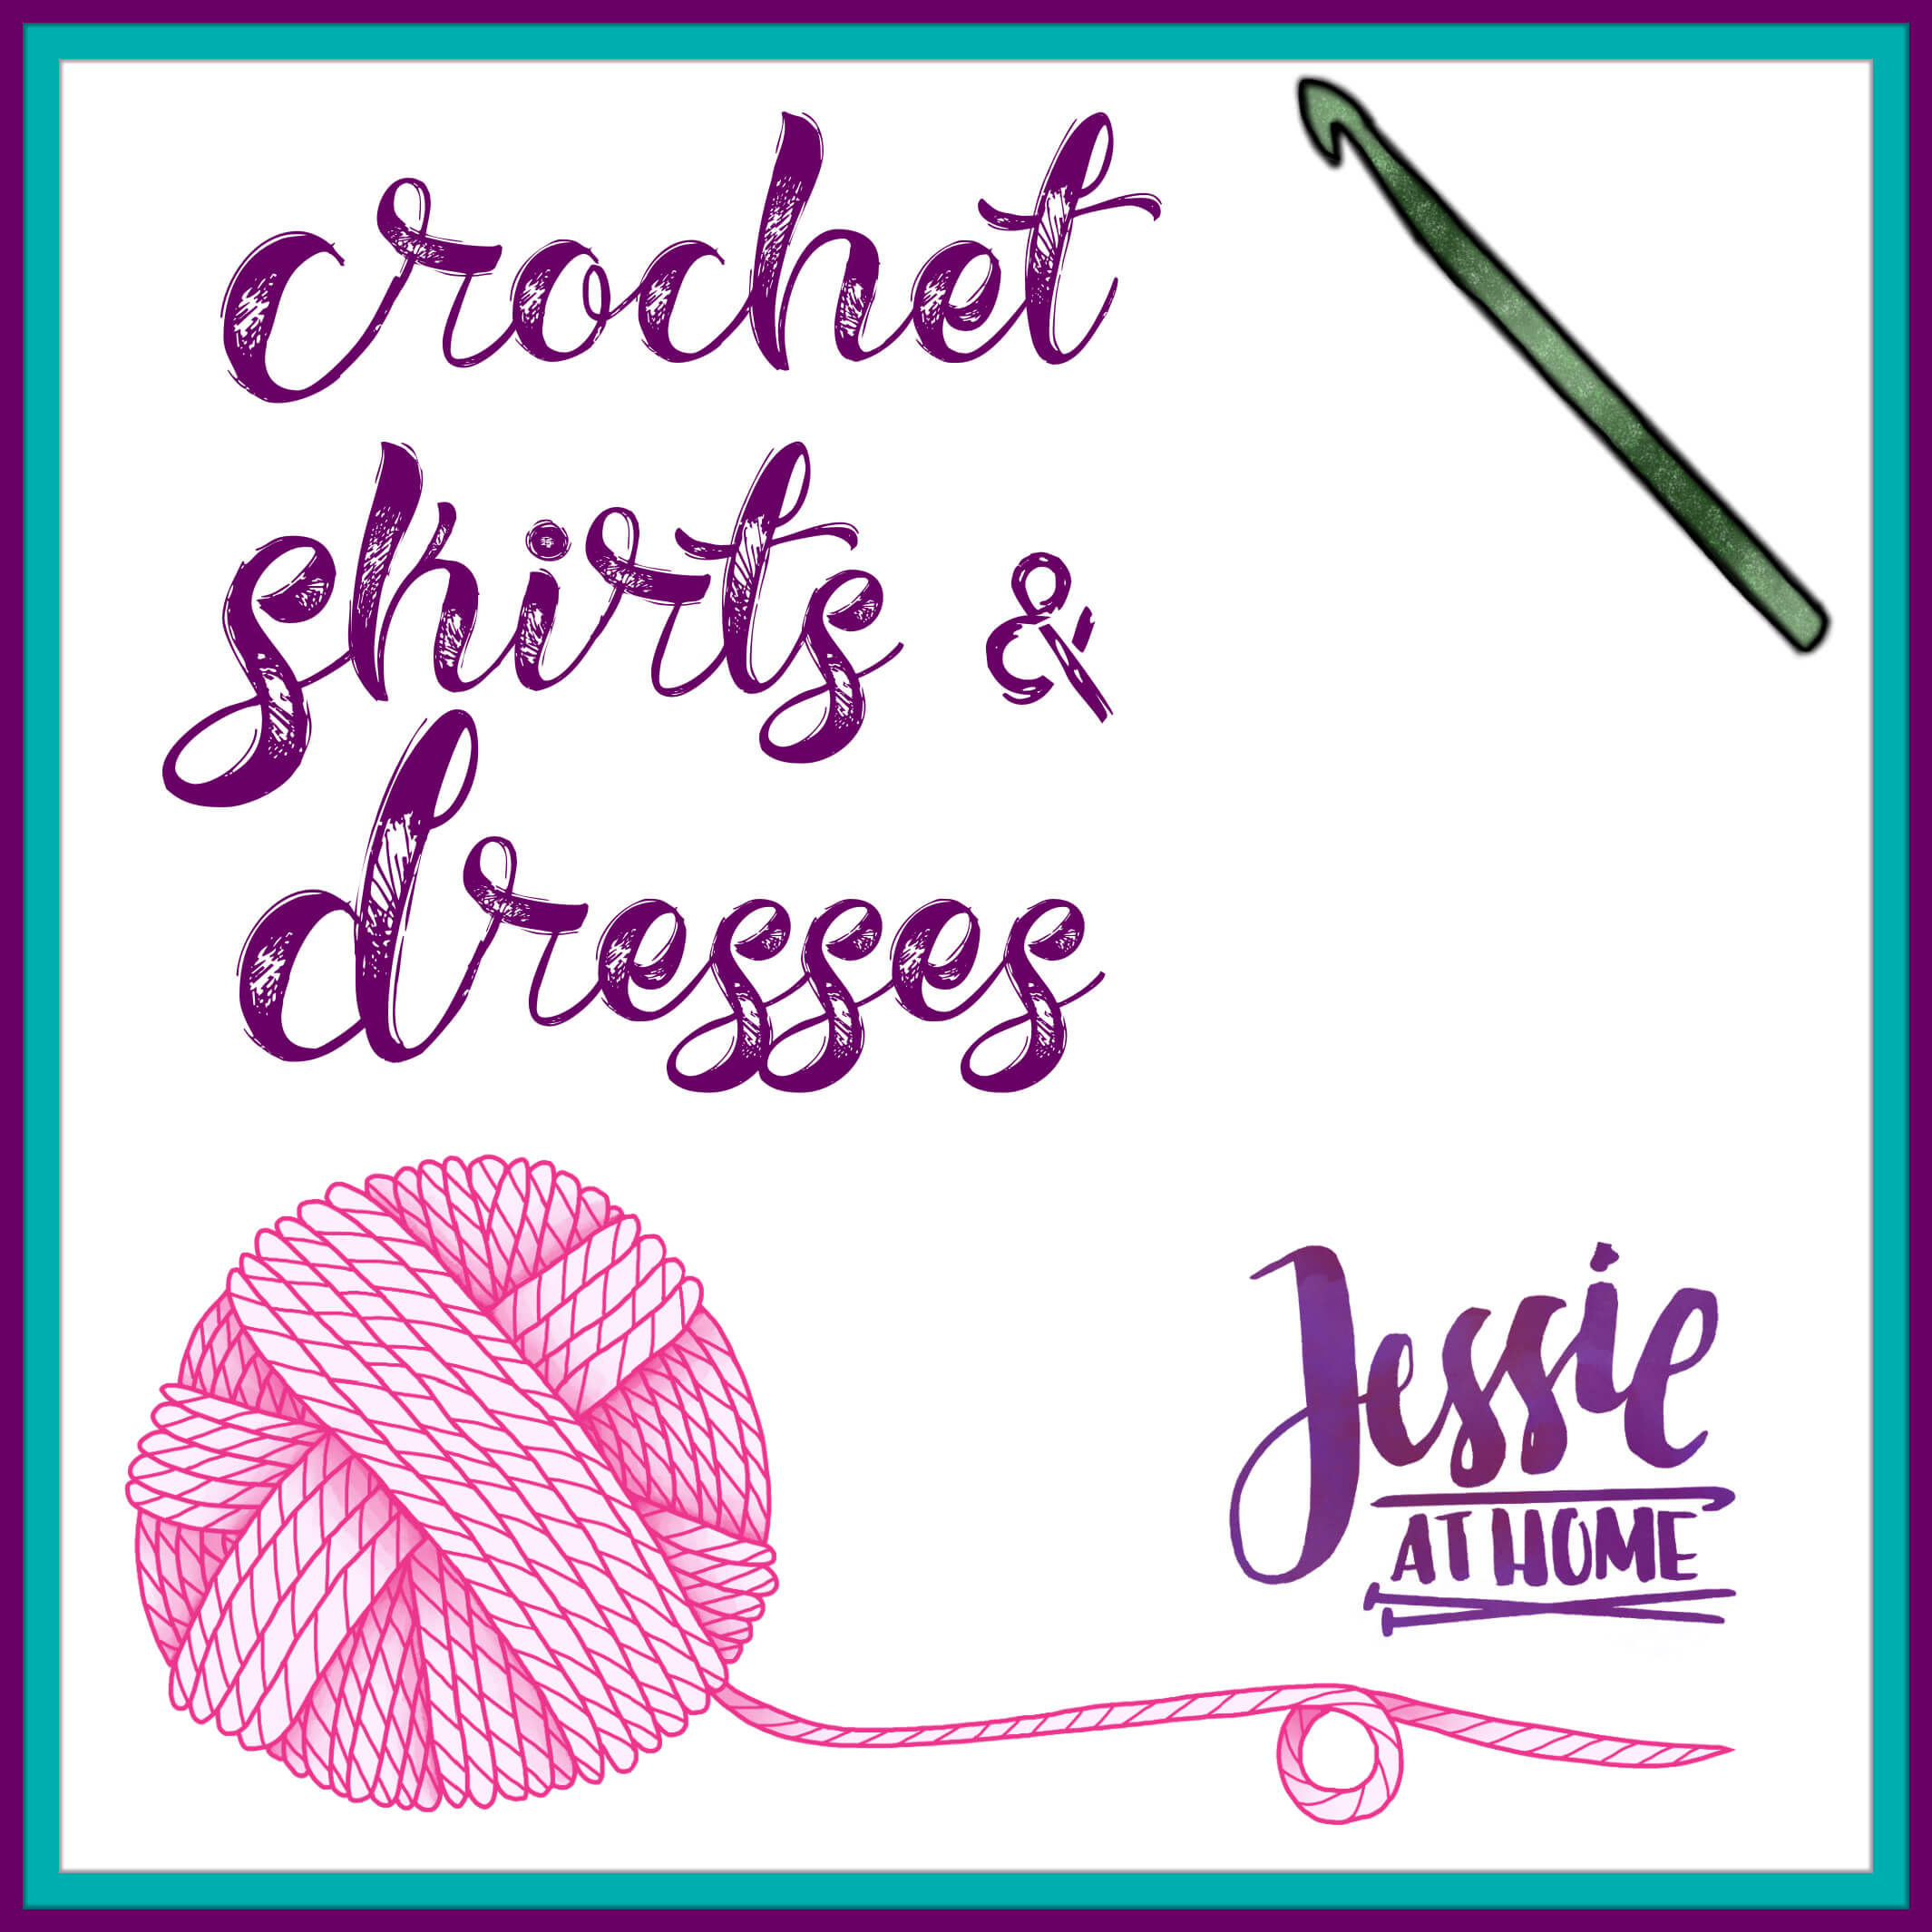 Crochet Skirts & Dresses Menu on Jessie At Home